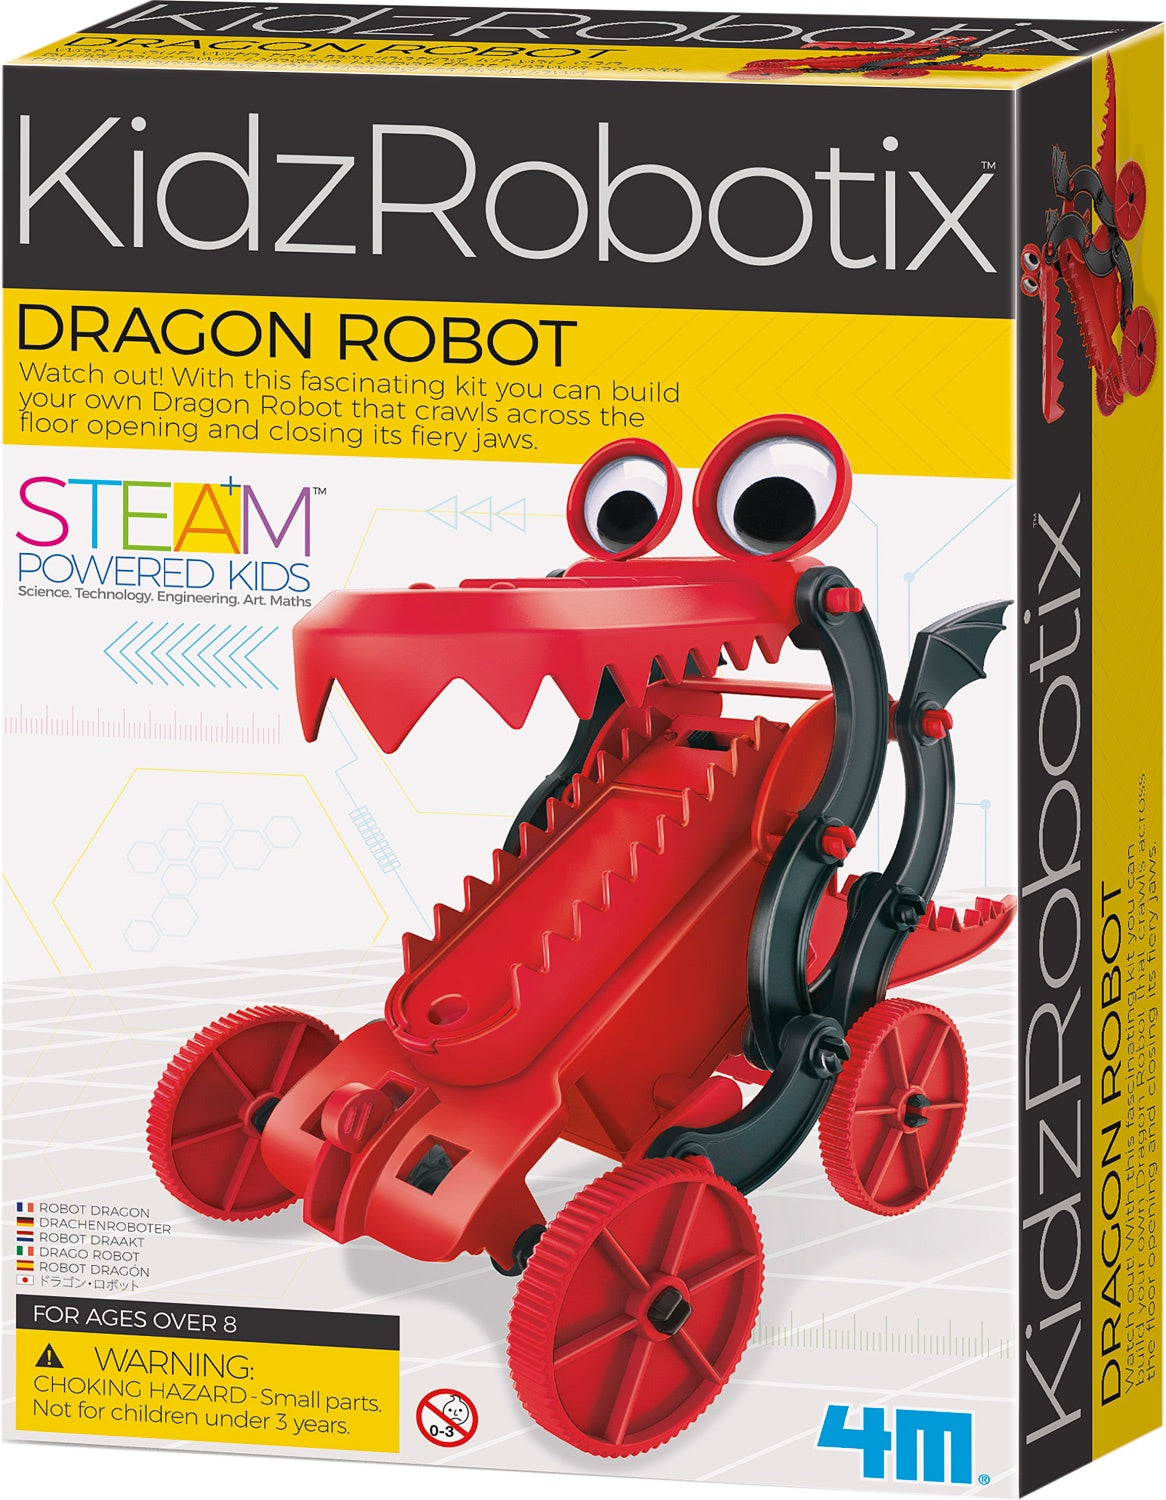 Dragon Robot Science Kit